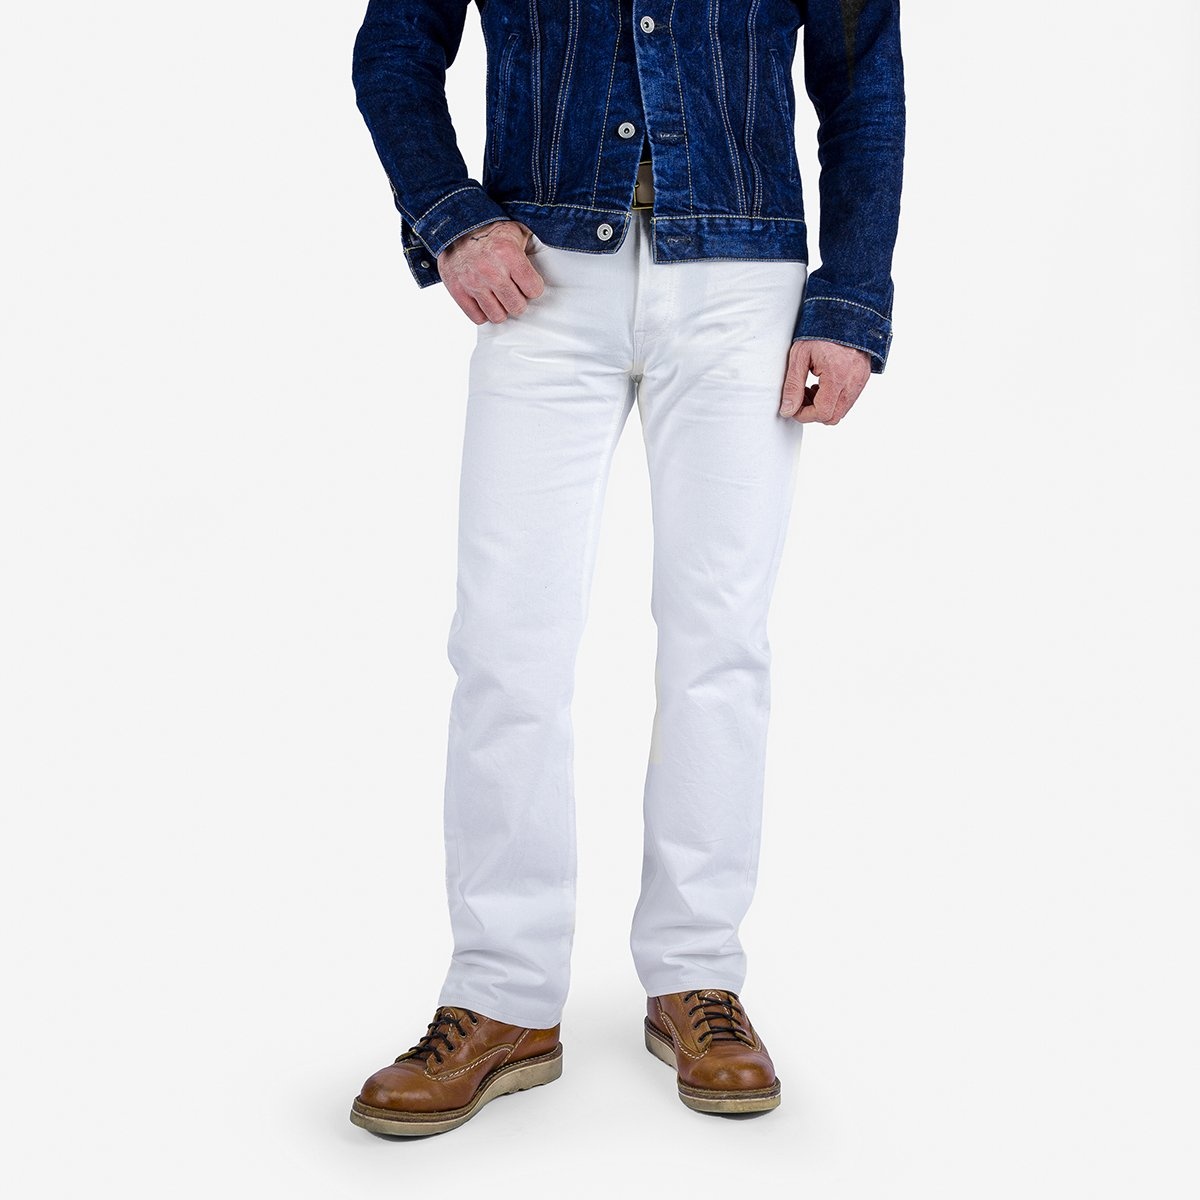 IH-666-WT 13.5oz Denim Slim Straight Cut Jeans - White - 2